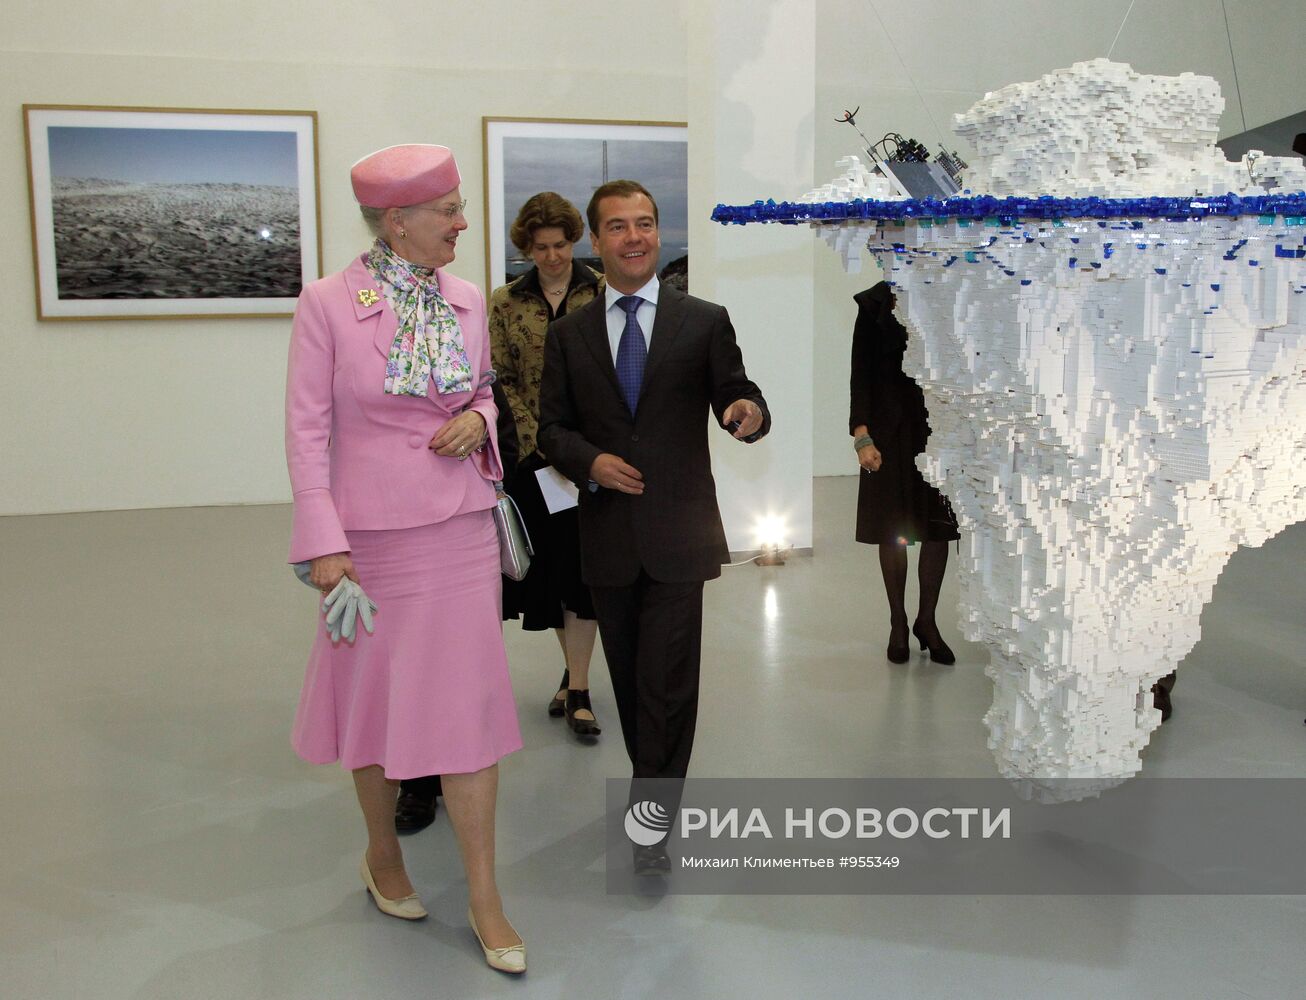 Президент РФ и королева Дании открыли фотовыставку "Арктика"